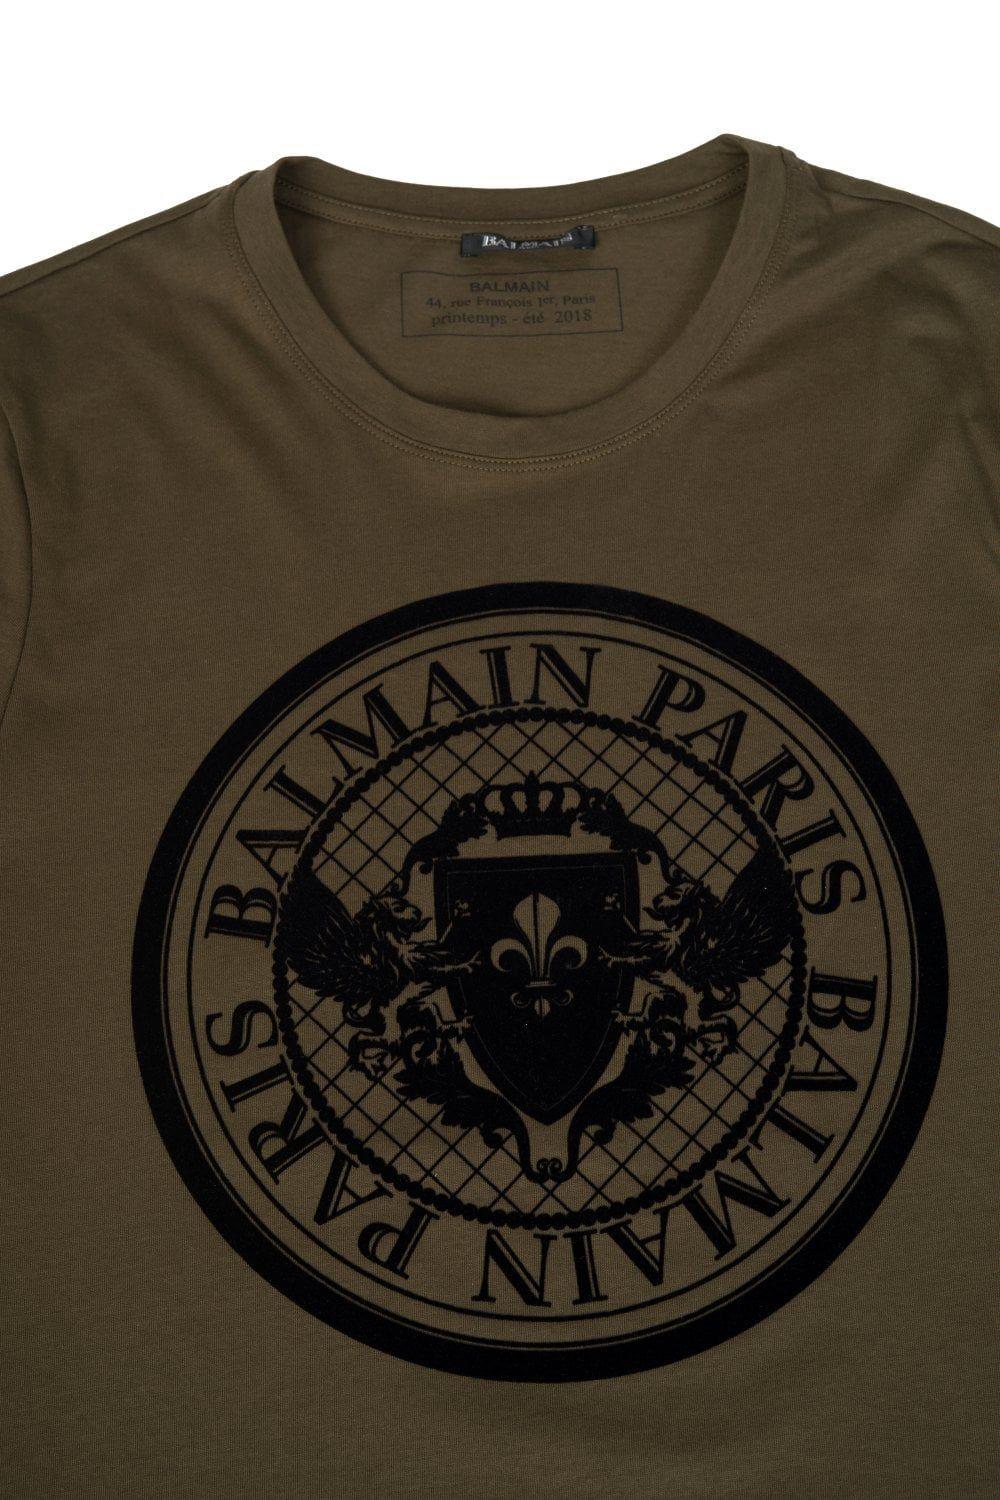 Balmain Coin Logo - BALMAIN Balmain Paris Coin Logo T-shirt - Uncategorised from Circle ...